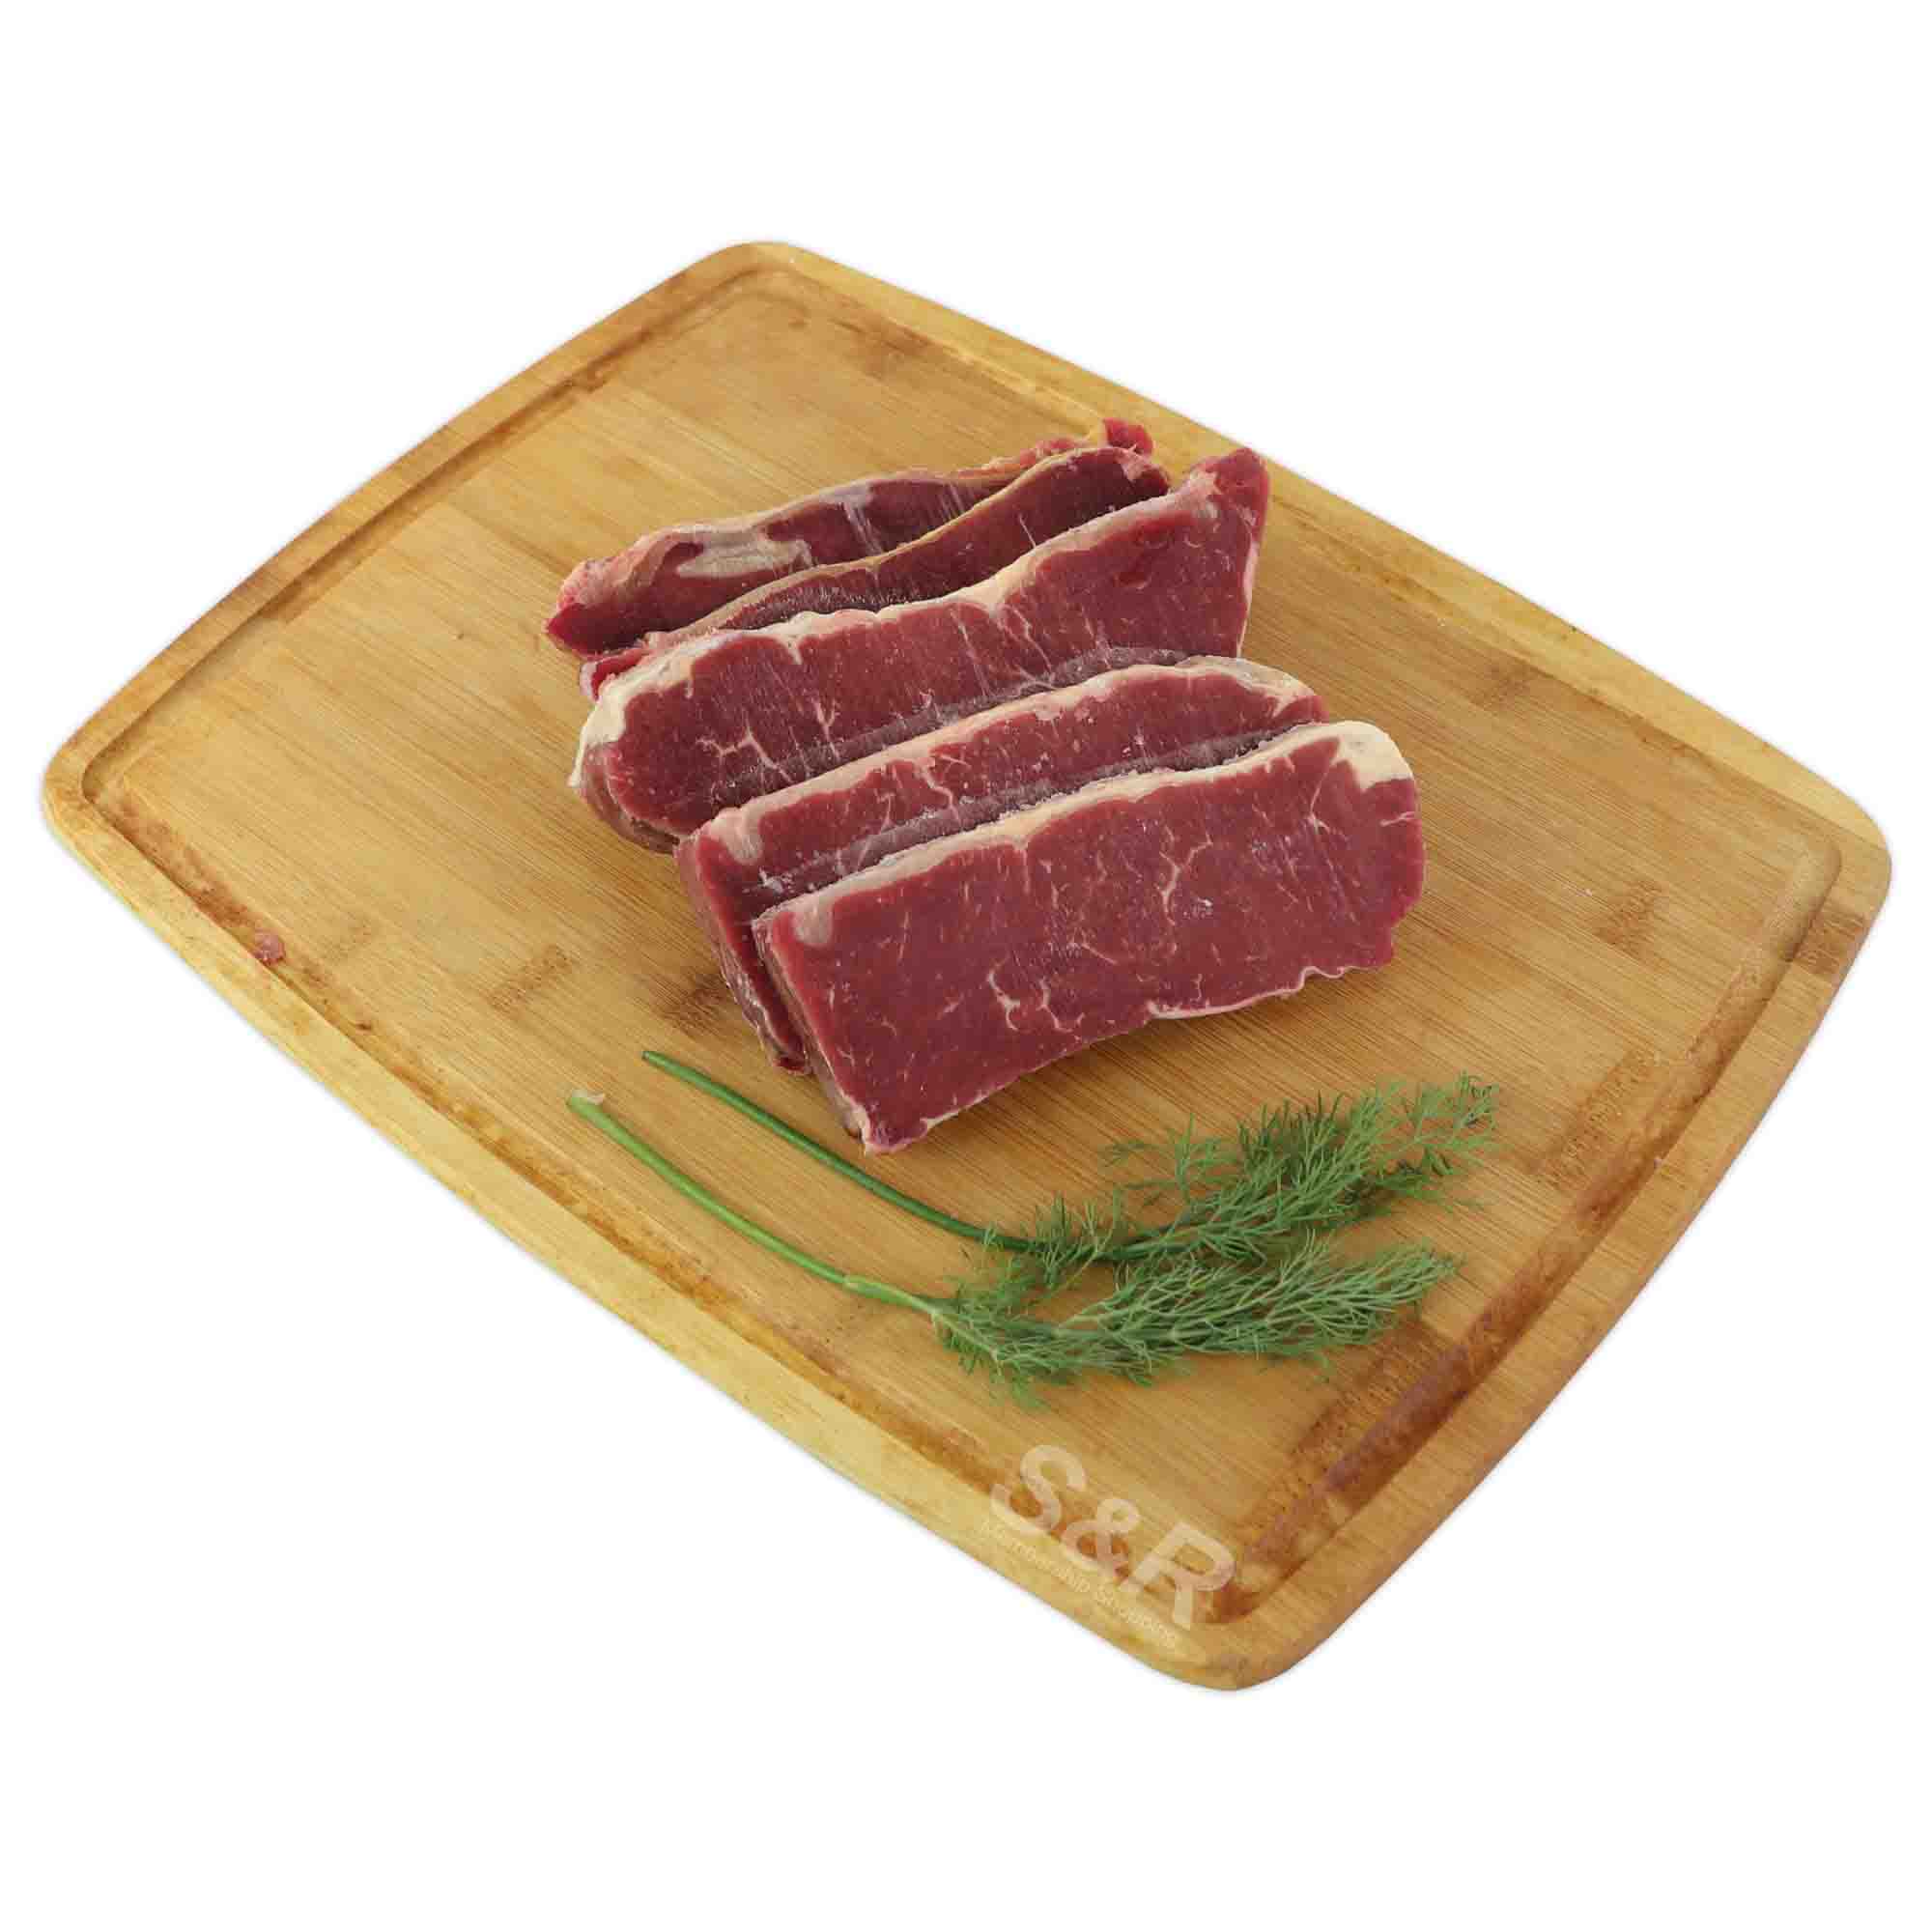 Member's Value Beef Striploin Steak approx. 2kg